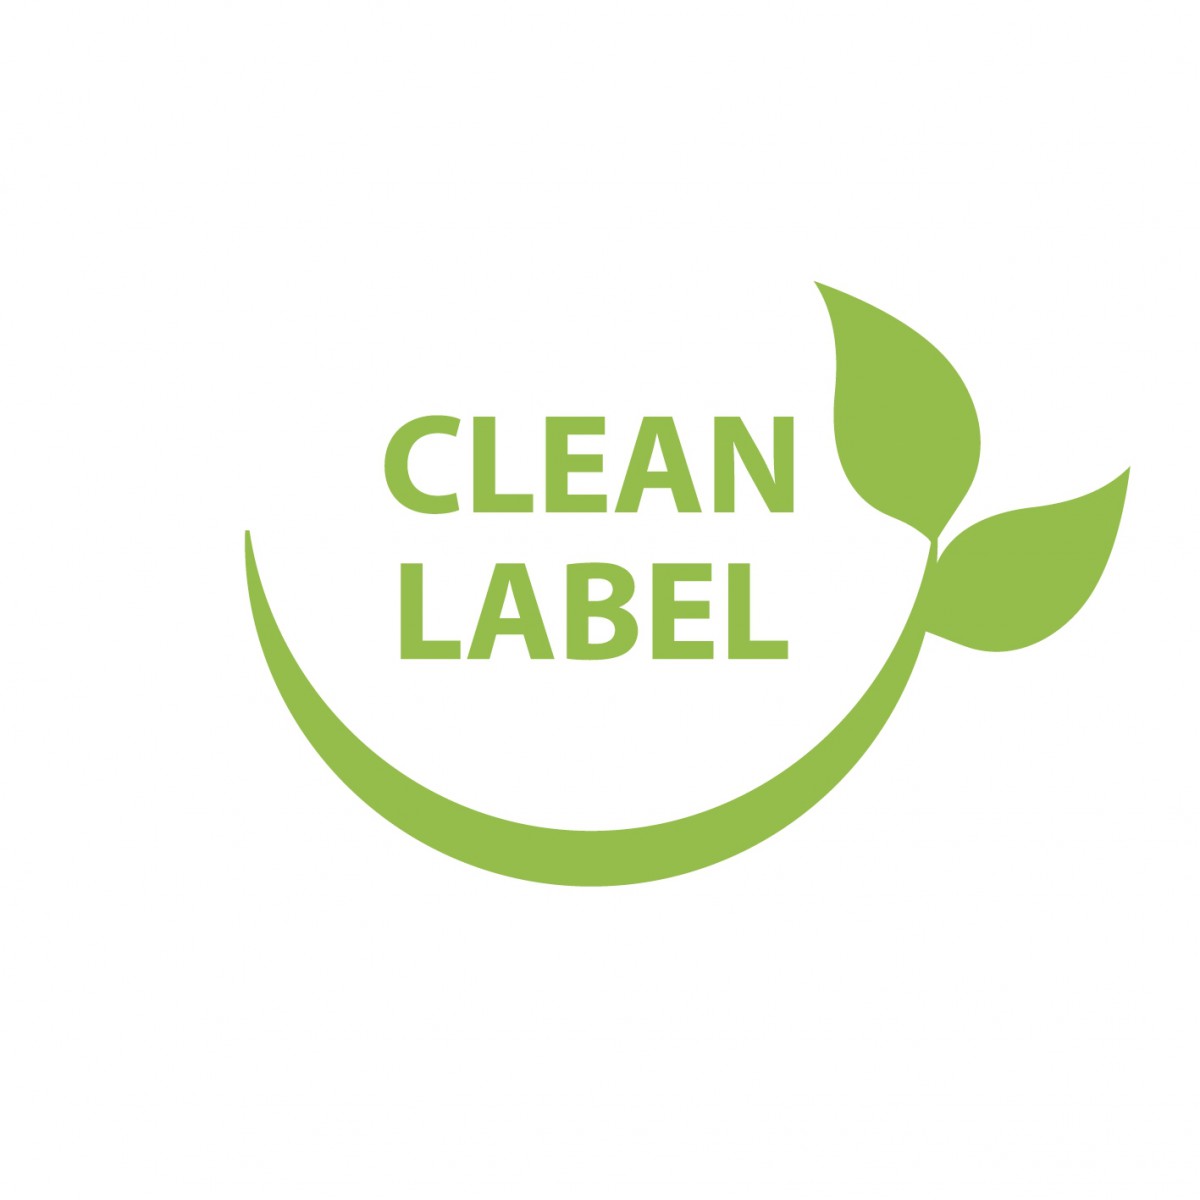 Label icons. Чистая этикетка. Clean Label. Clean Label логотип. Надписи Clam.